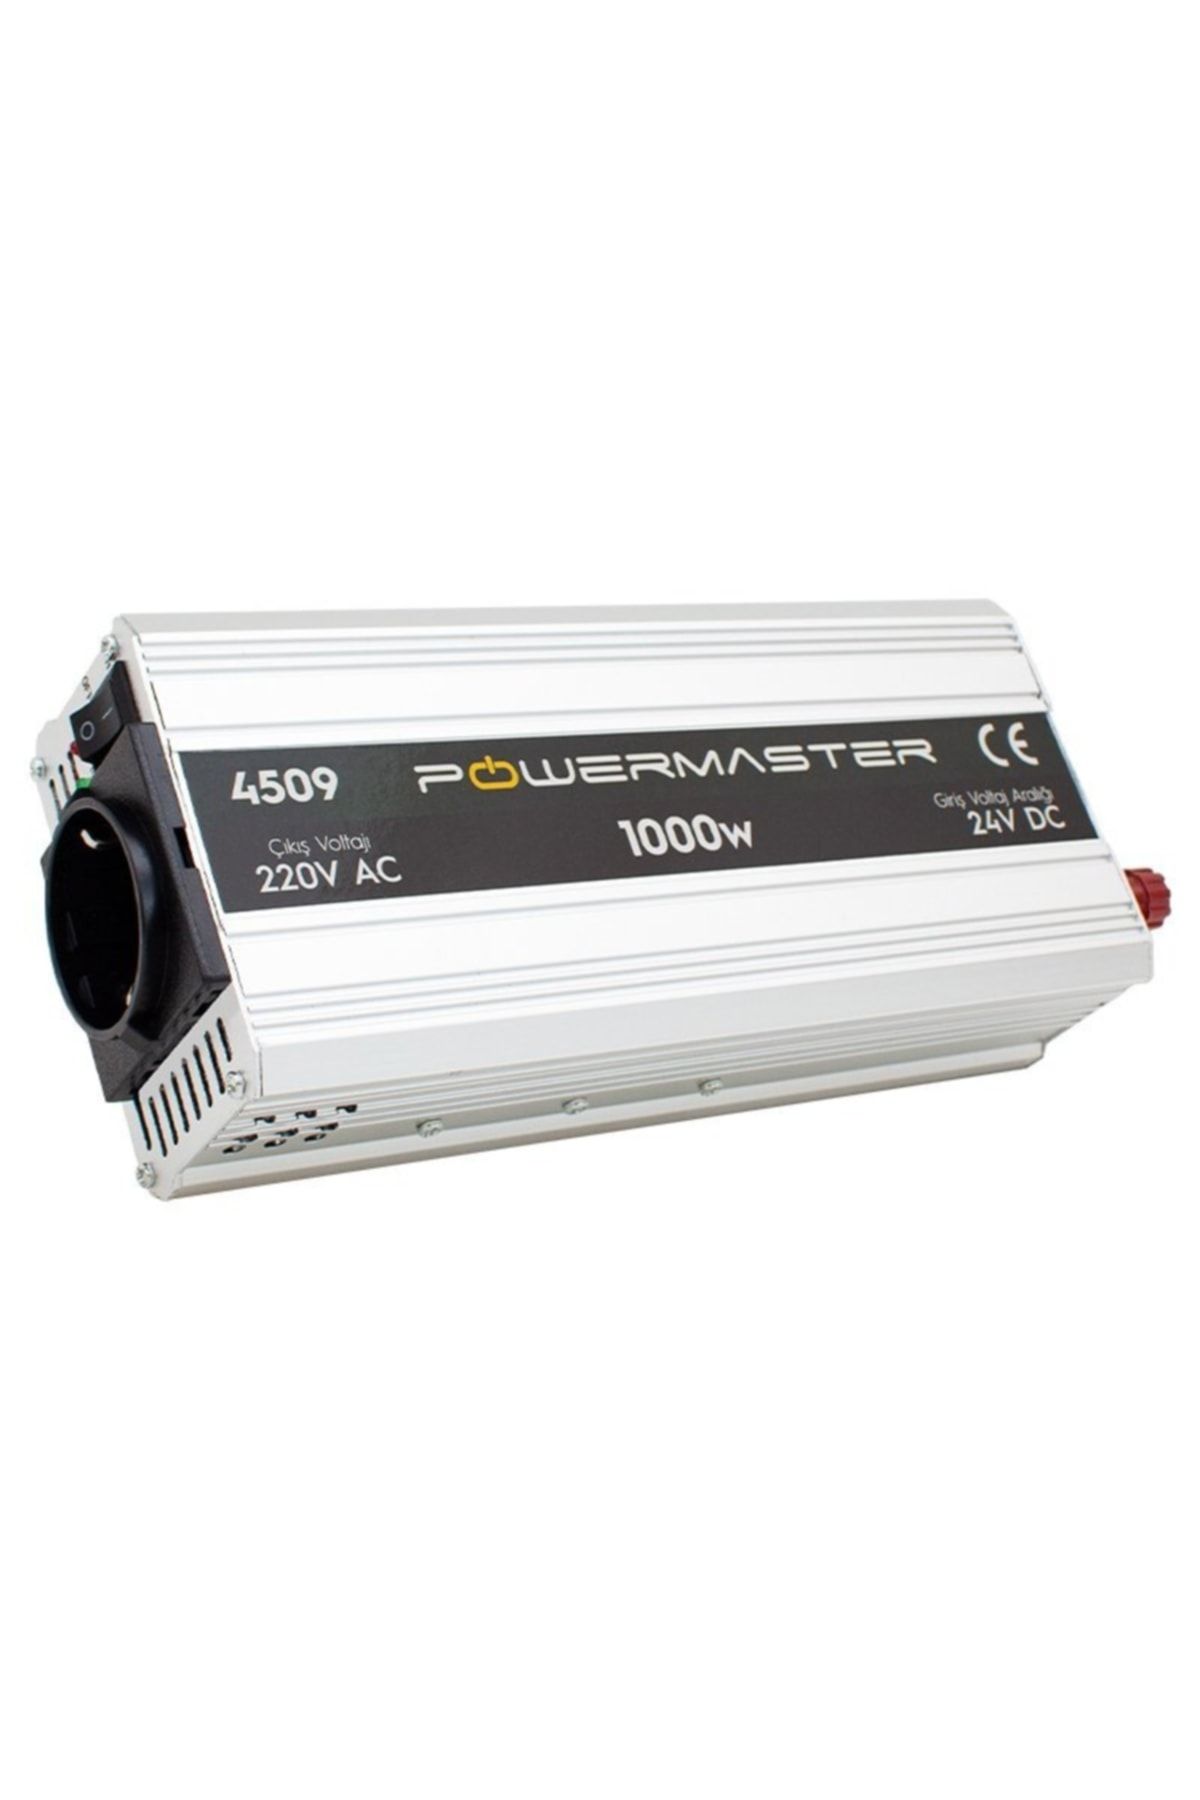 Powermaster Pm-4509 24 Volt 1000 Watt Modıfıed Sınus Inverter